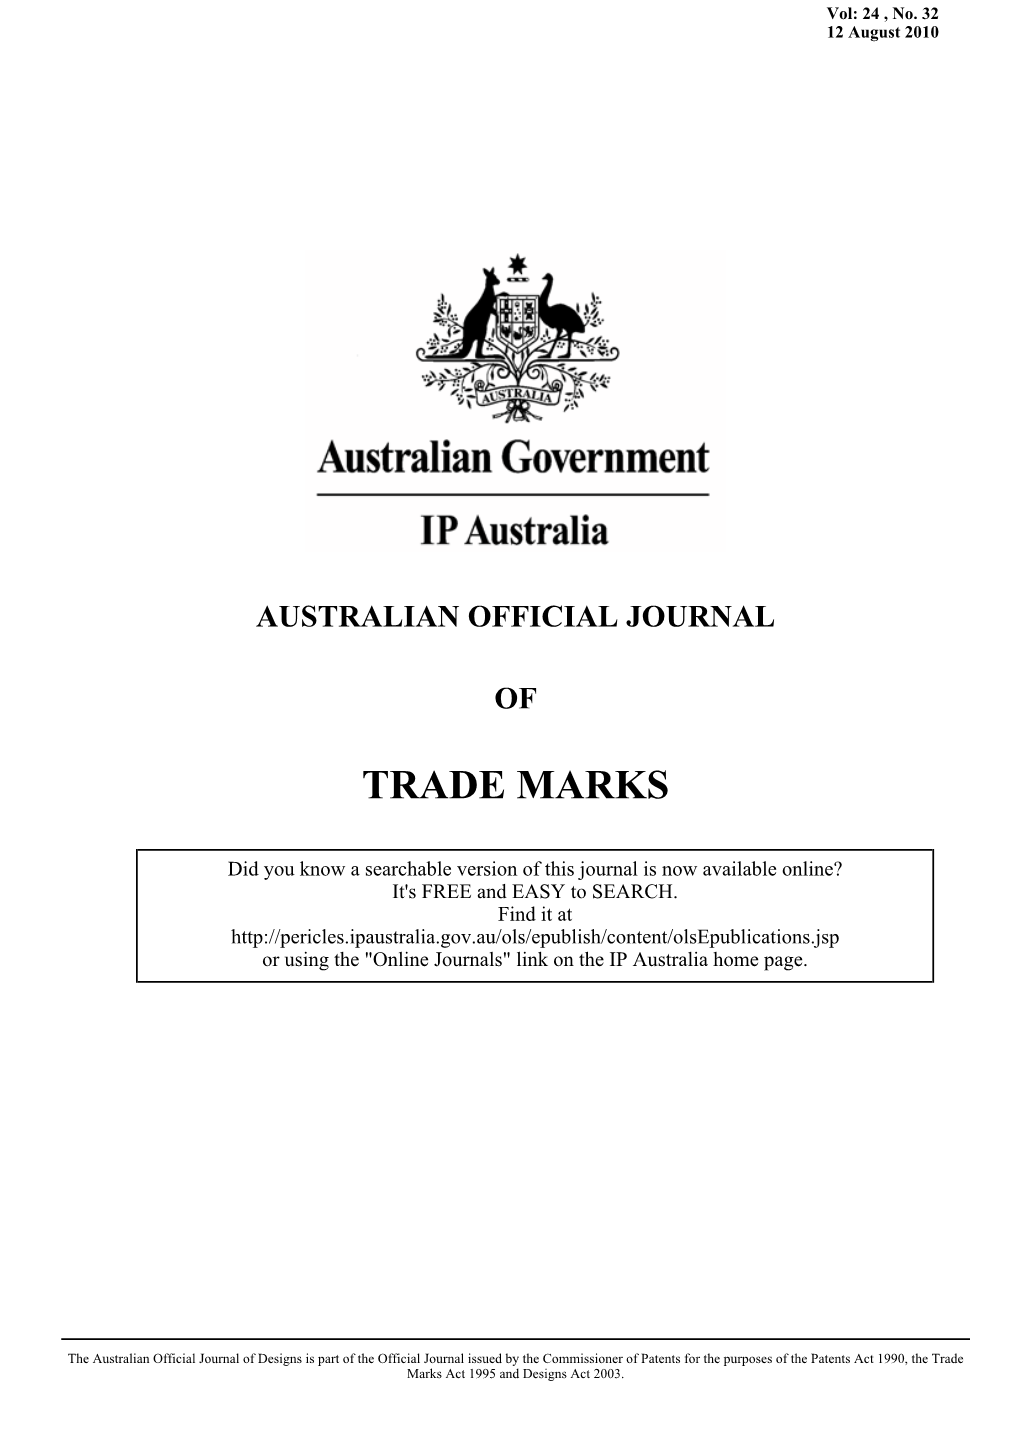 AUSTRALIAN OFFICIAL JOURNAL of TRADE MARKS 12 August 2010